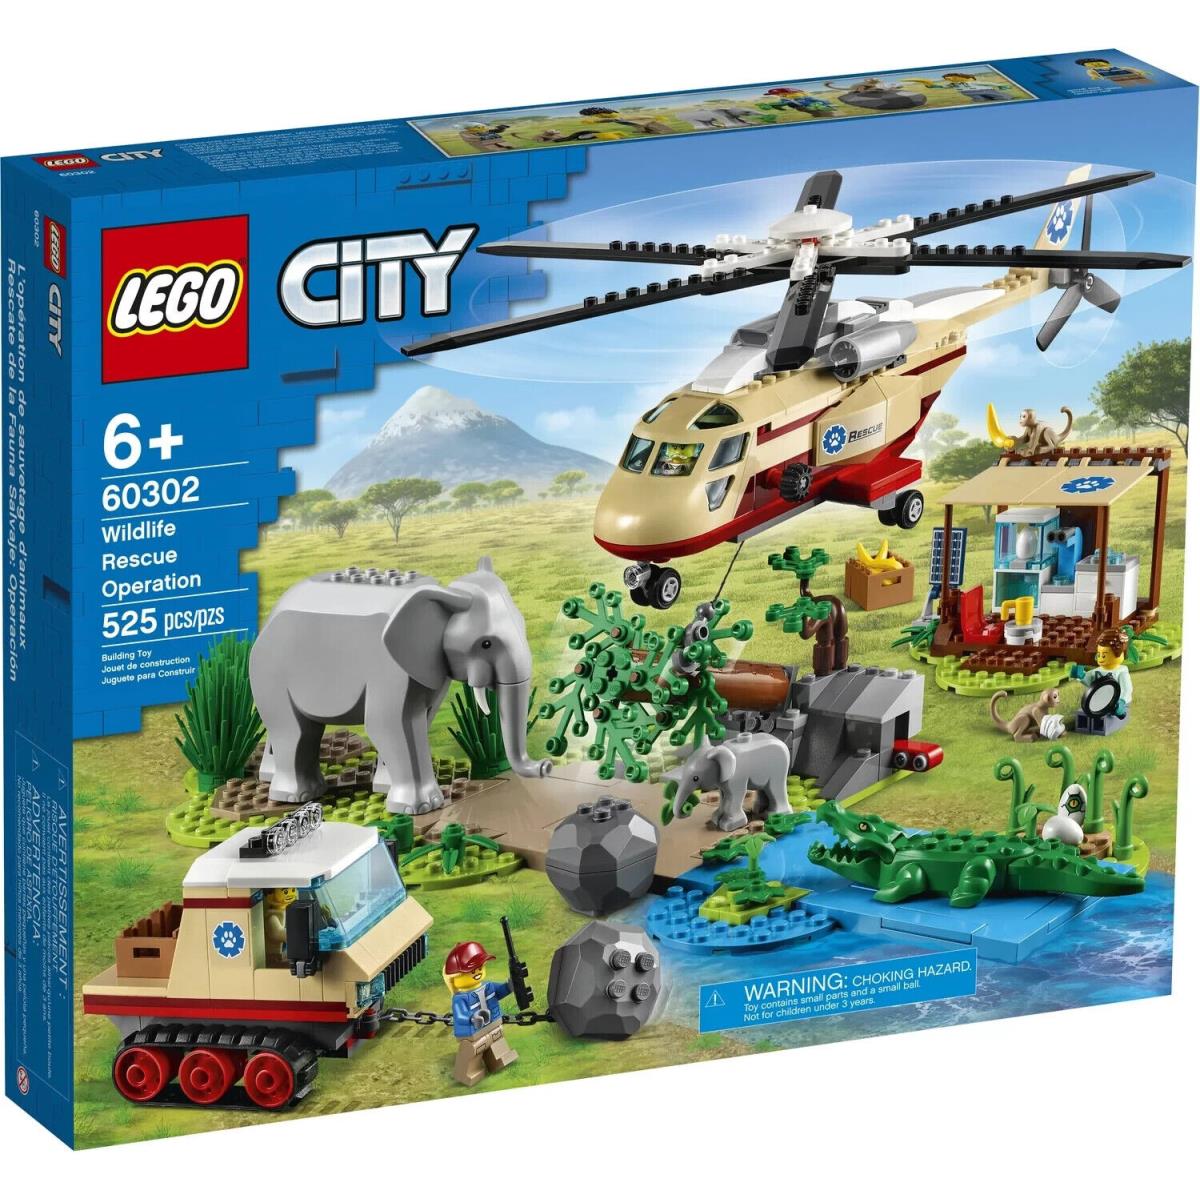 Lego City Wildlife Rescue Operation 60302 See Description